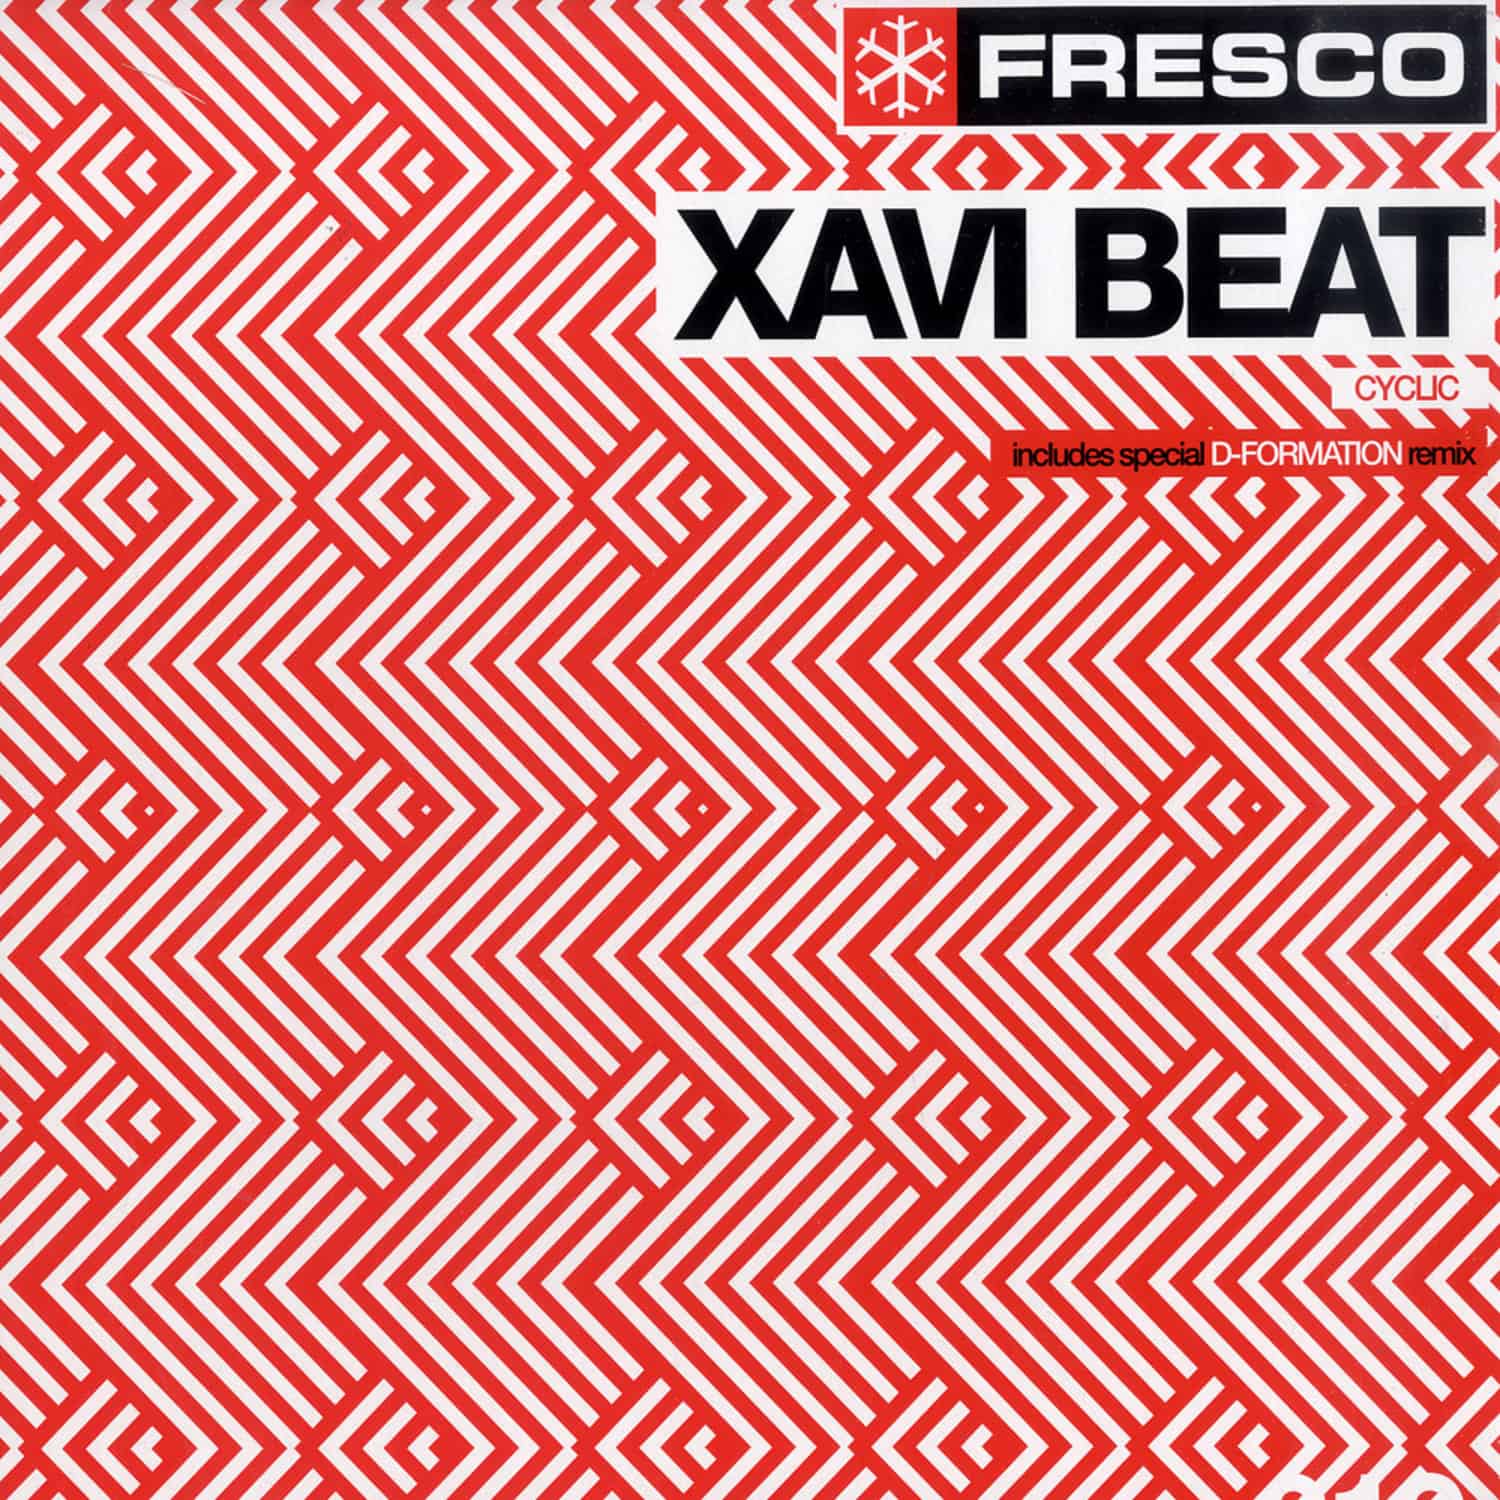 Xavi Beat - CYCLIC / D-FORMATION RMX